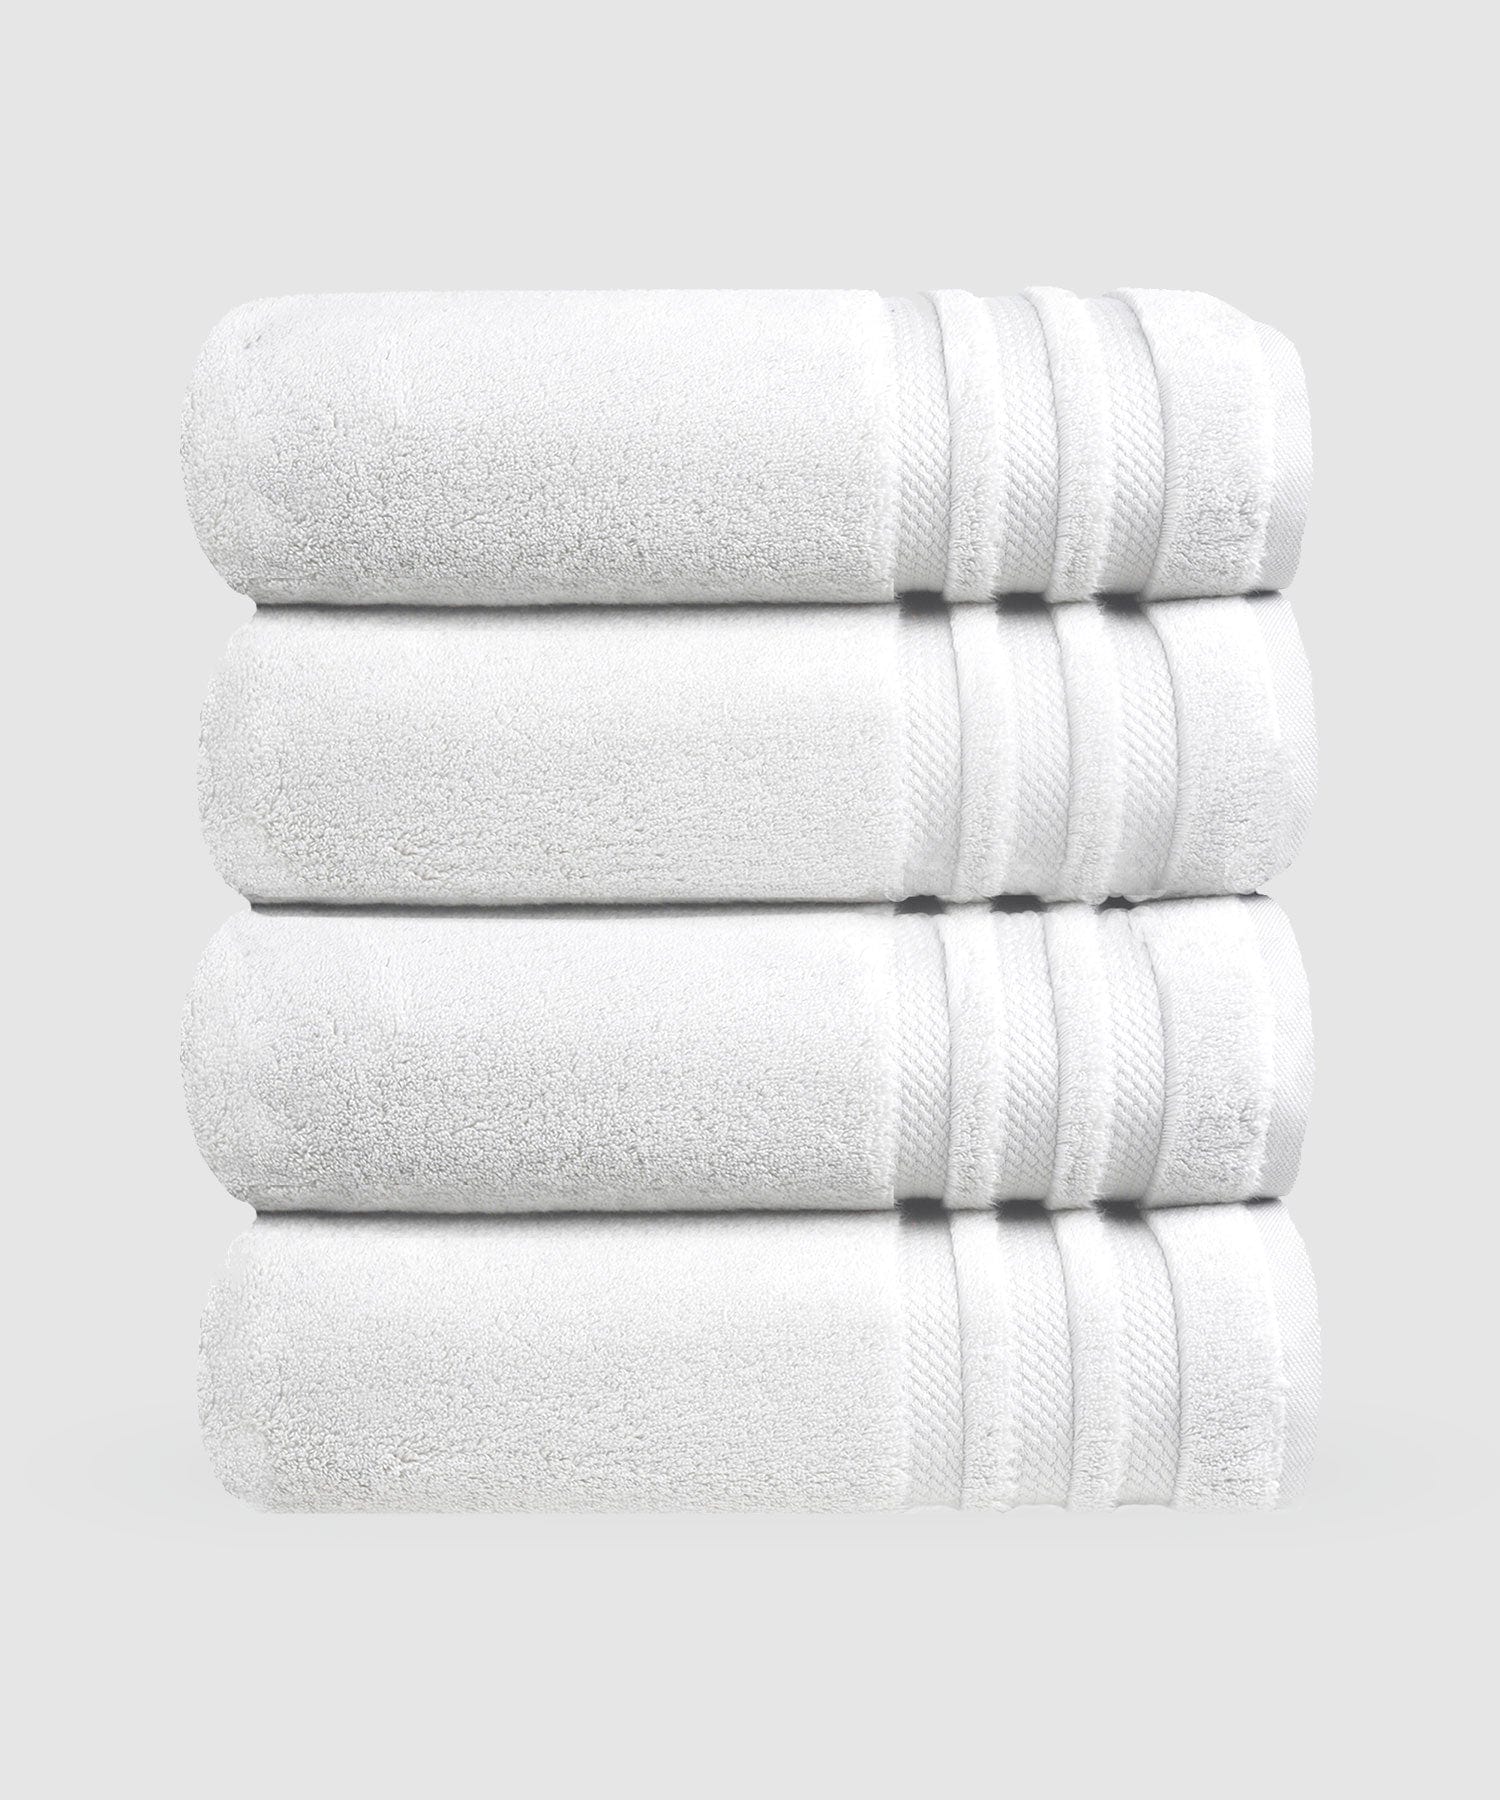 4 Pieces Bath Towels ₹4019/-